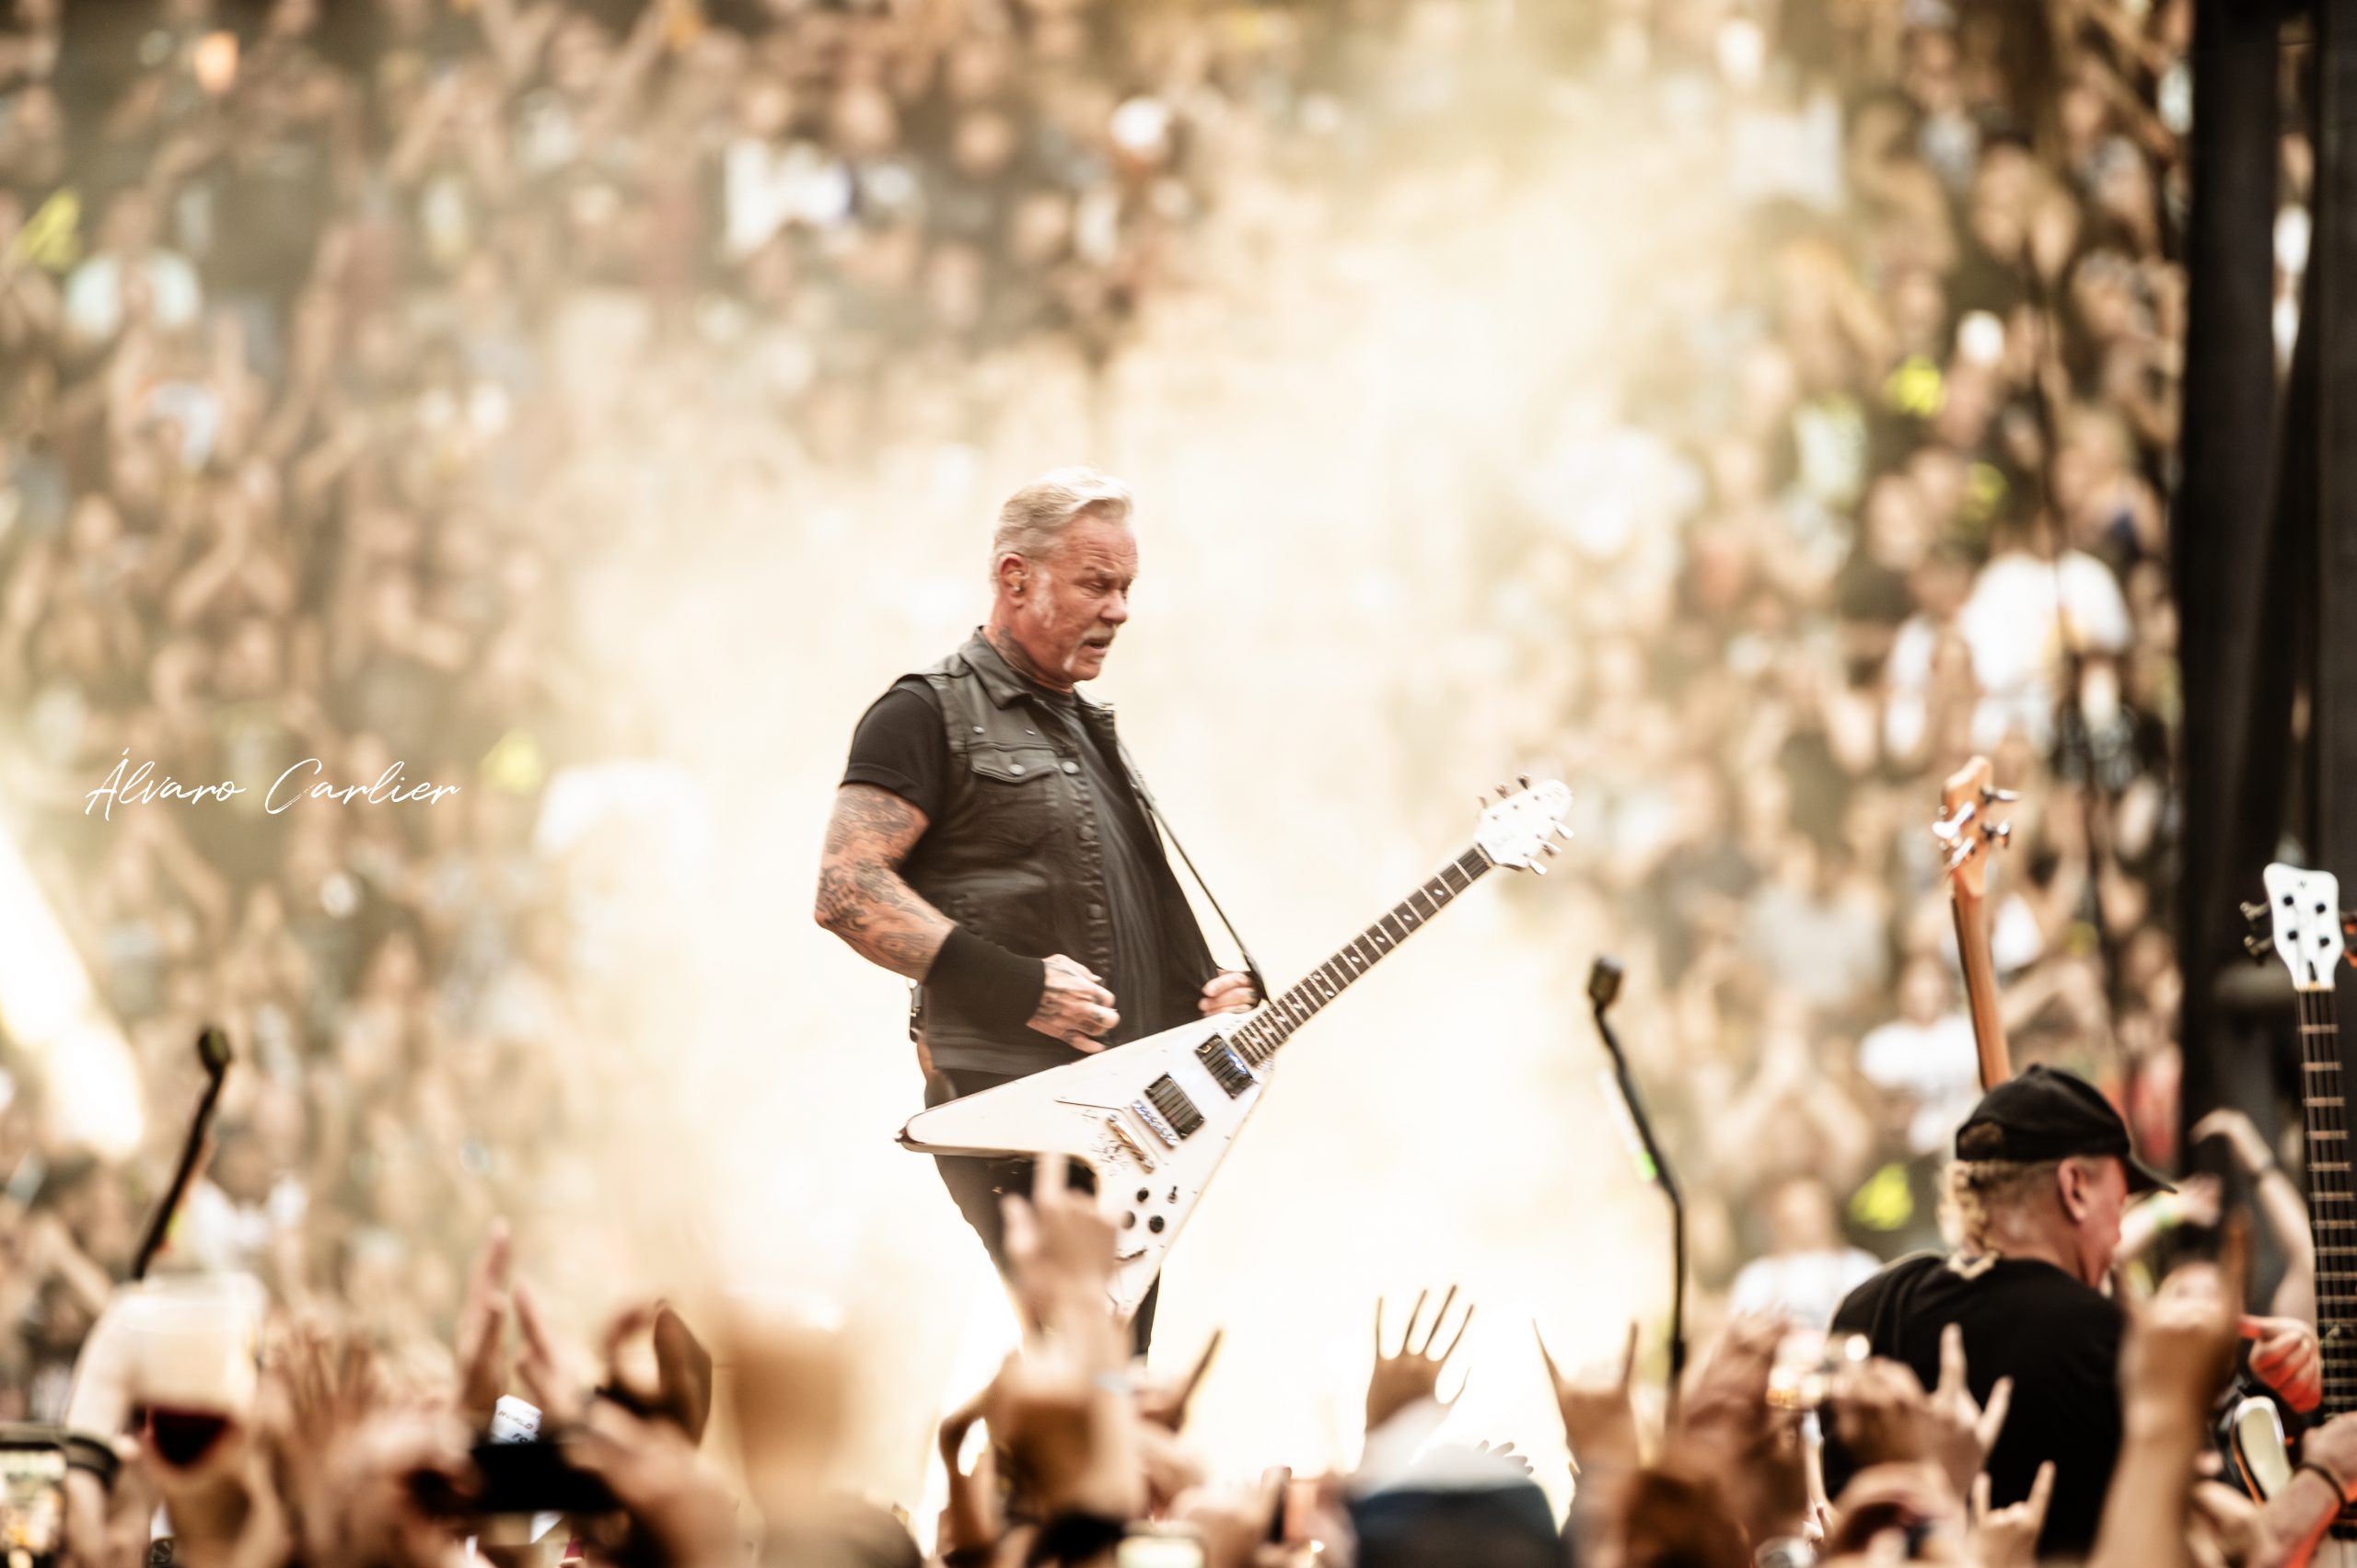 Metallica, Alvaro Carlier